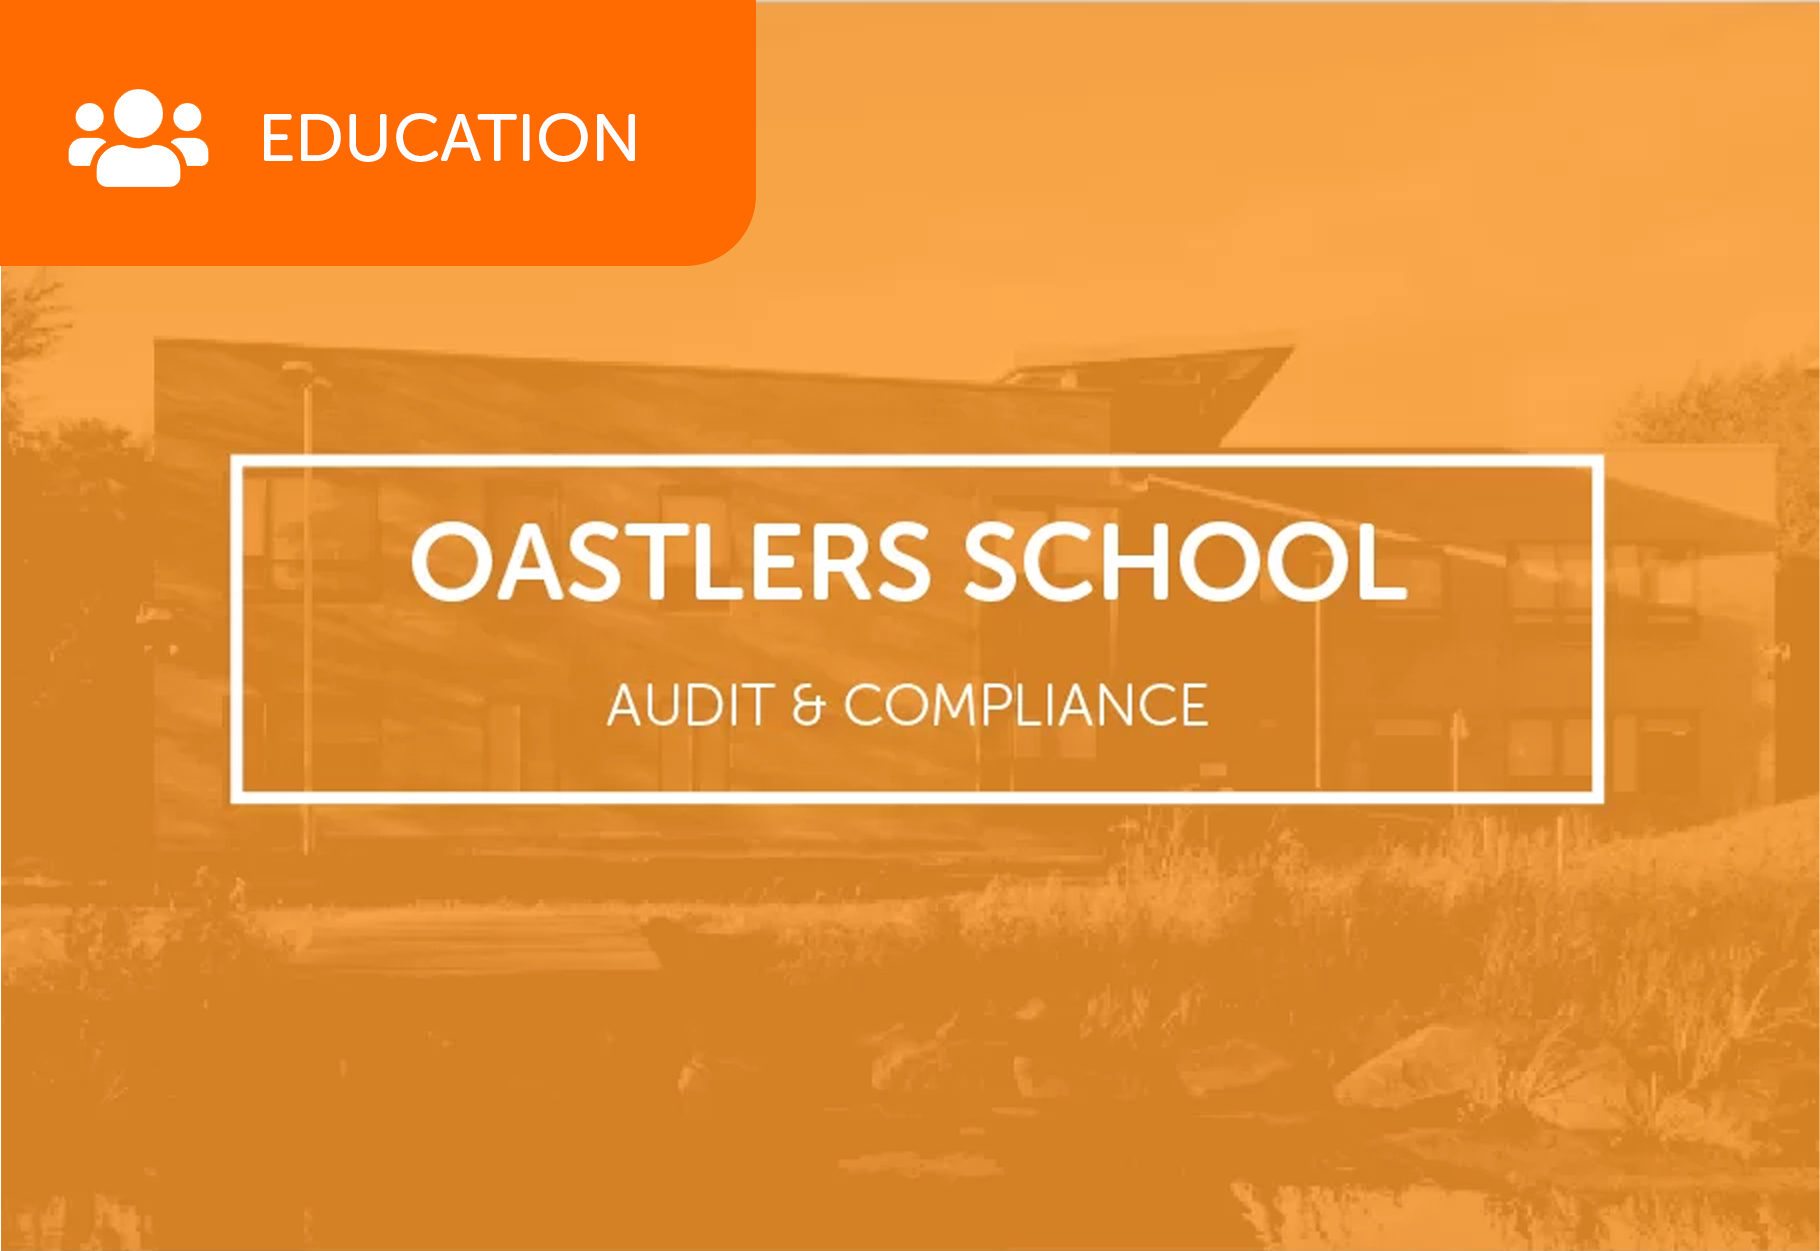 oastlers_school